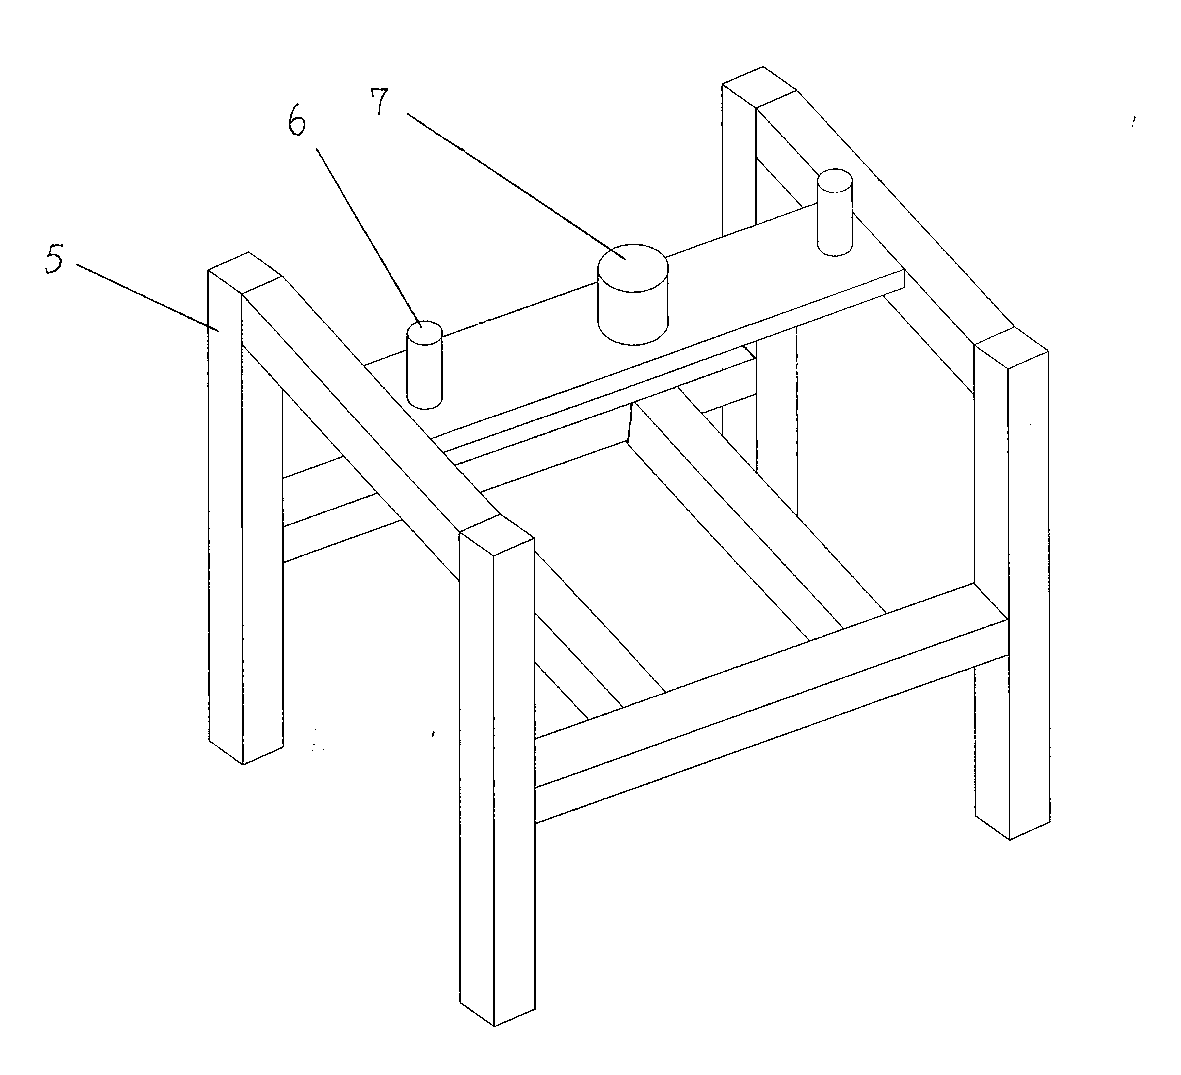 Four-edge board cutting machine for cutting carpentry veneer and four-edge cutting method of carpentry veneer